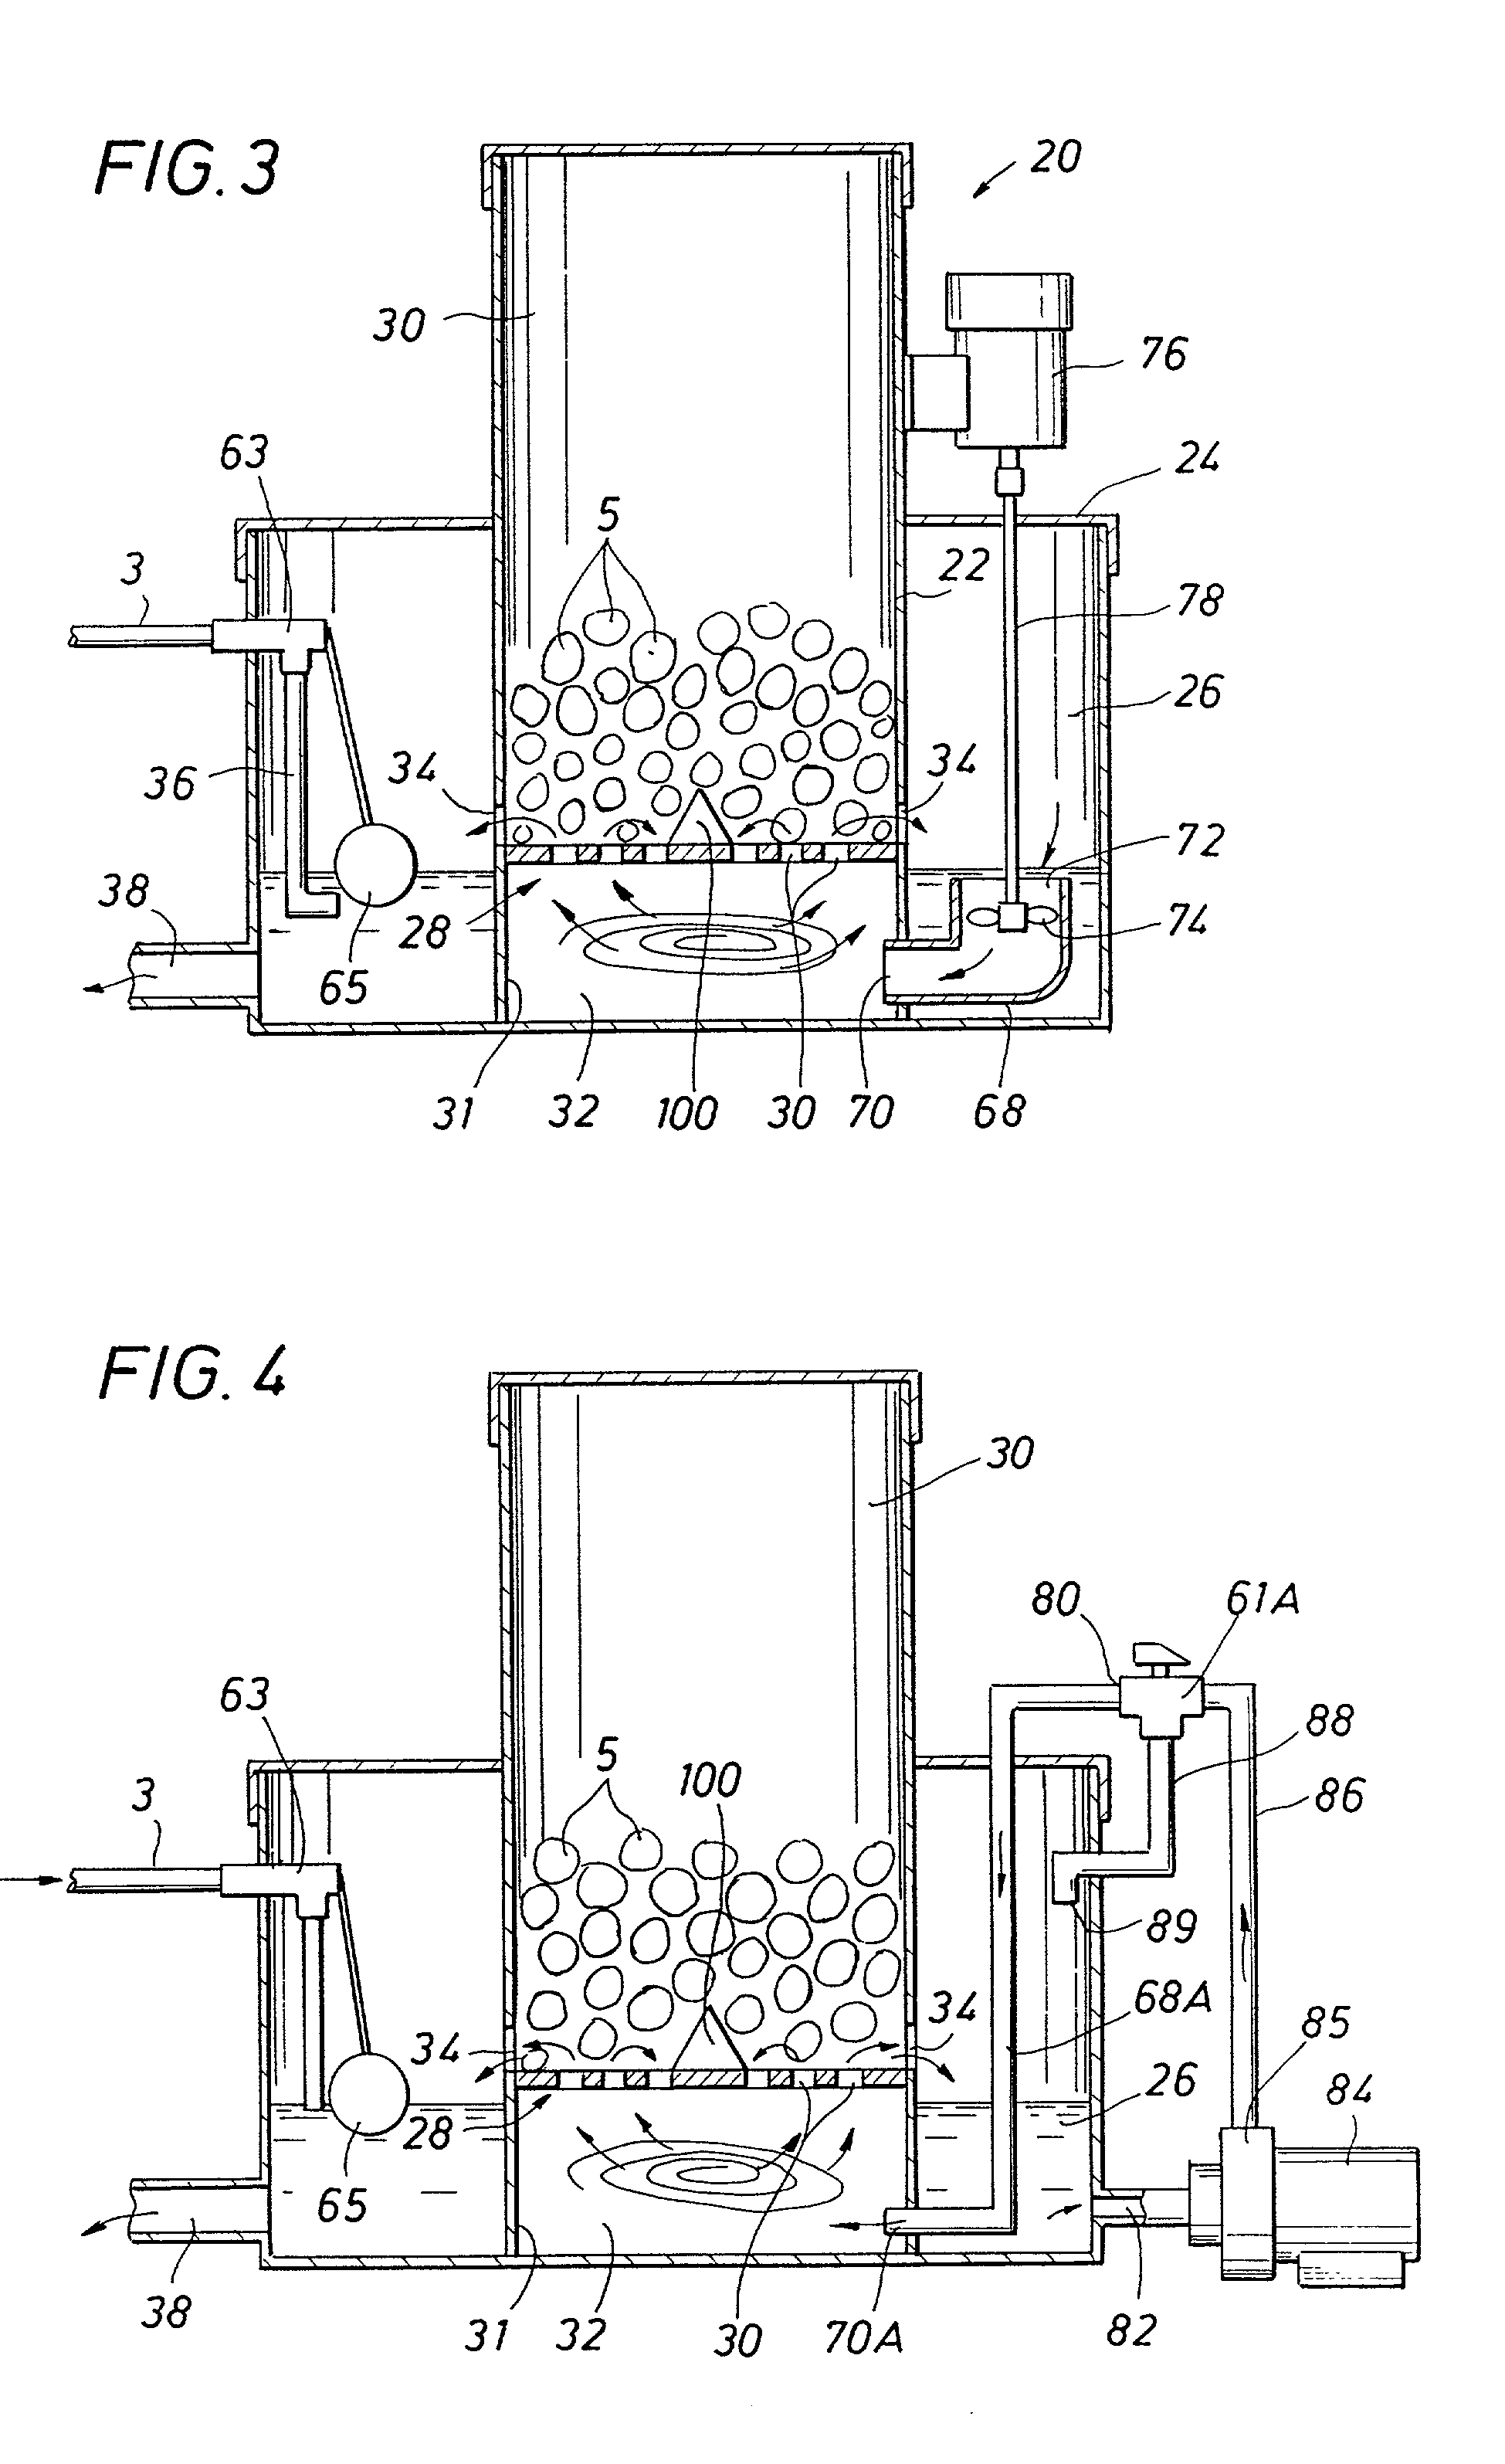 Chlorination apparatus and method